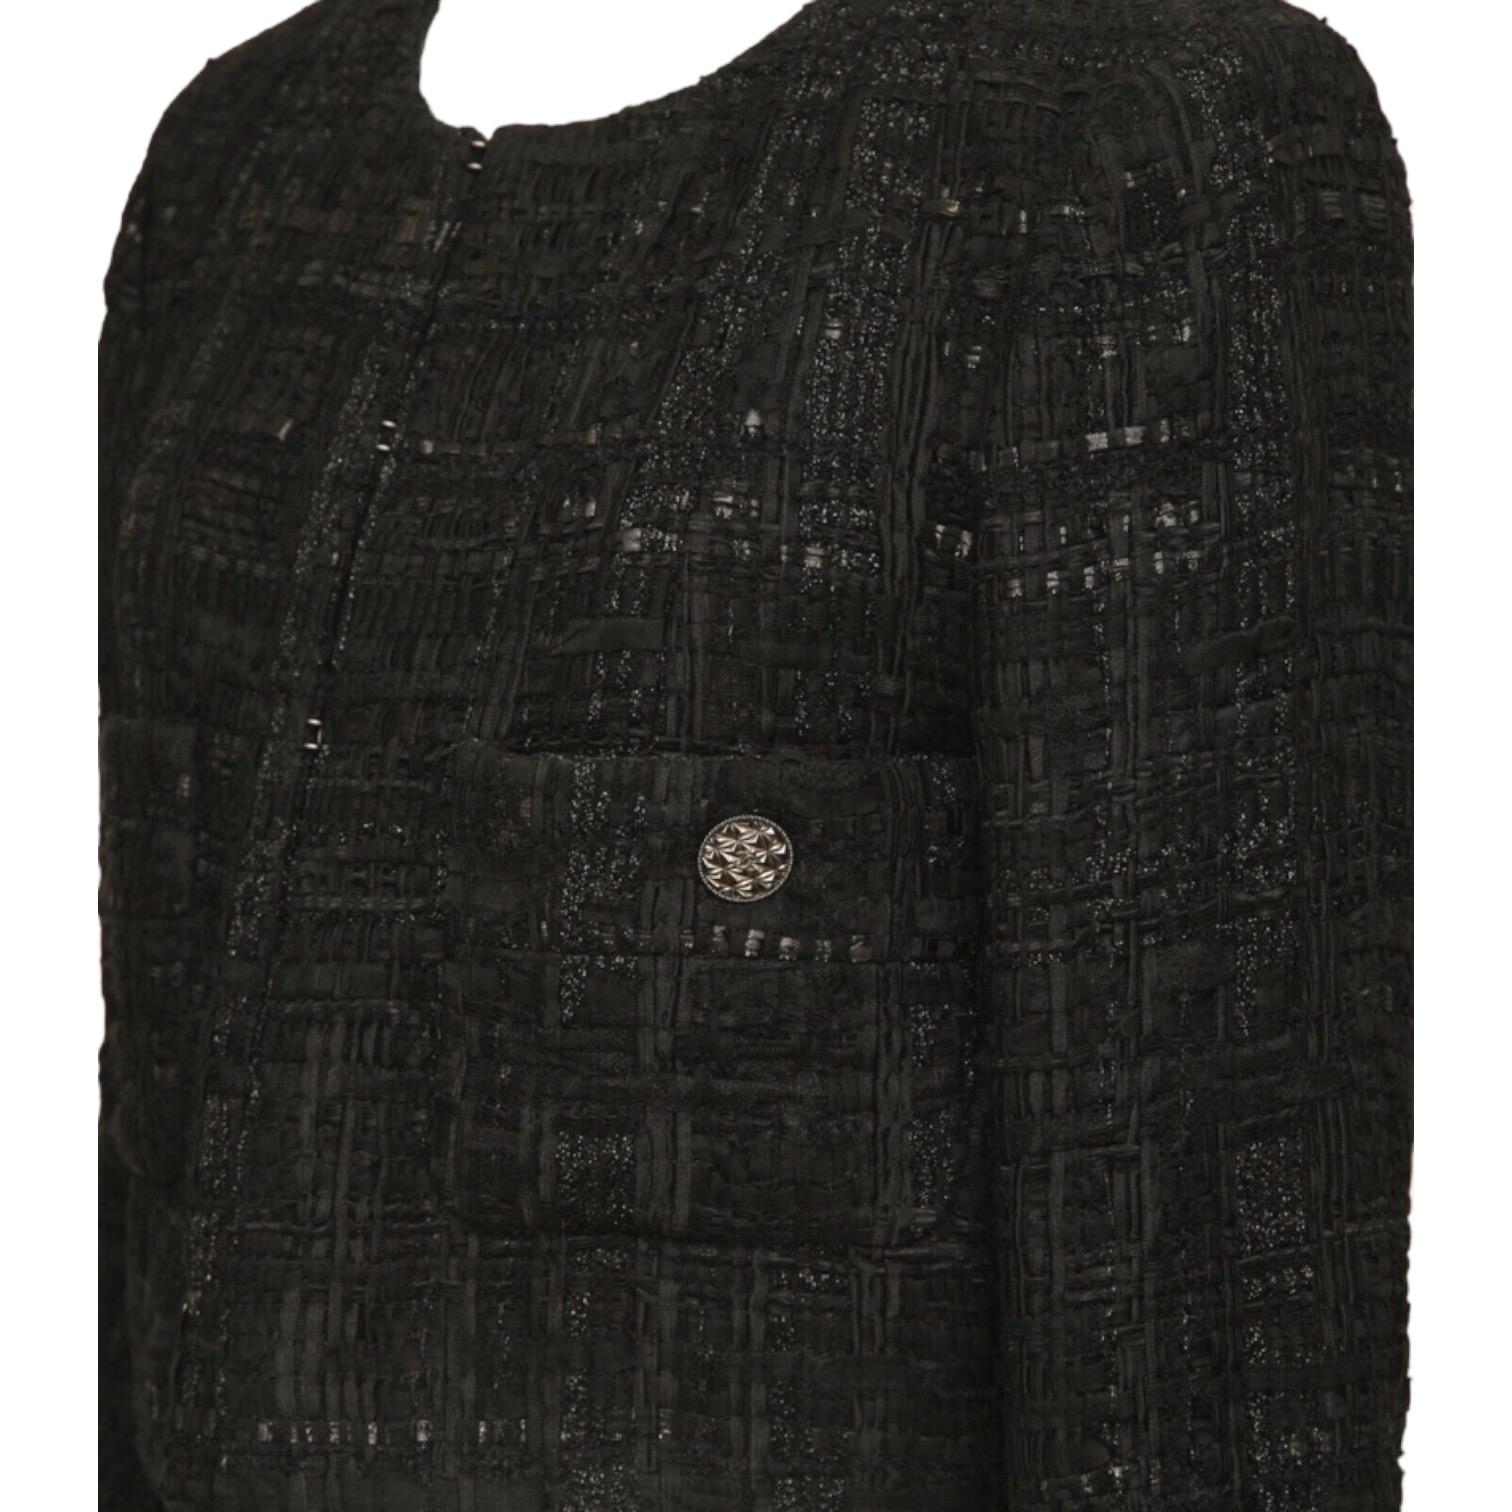 Women's CHANEL Black Tweed Jacket Fantasy Hook Eye Pocket Gunmetal Dubai sz38 $6750 NWOT